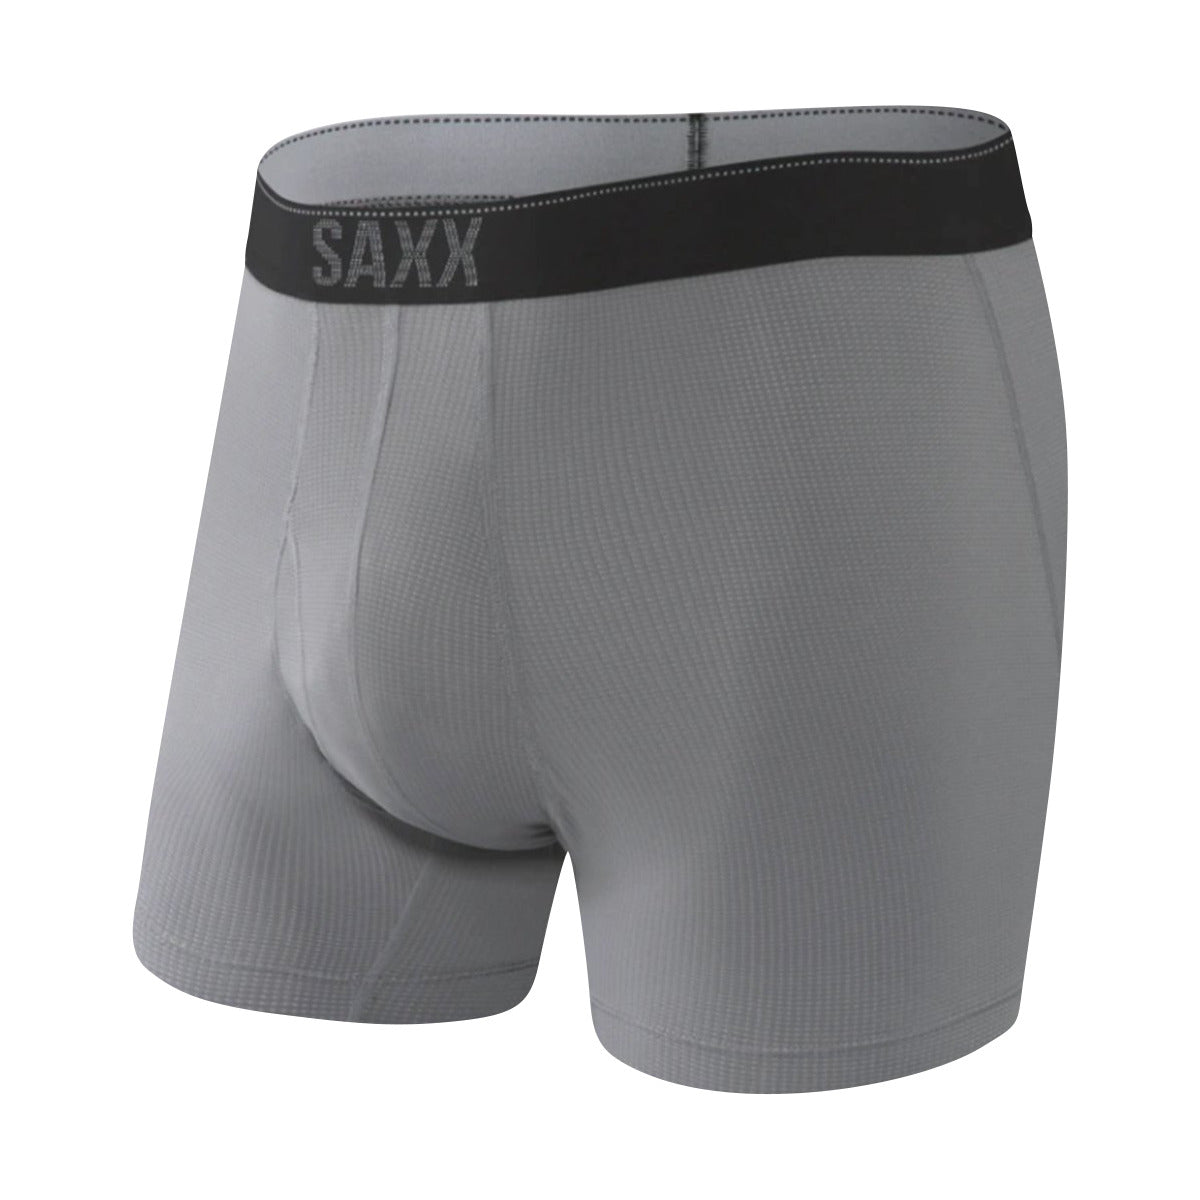 SAXX Quest Short Boxer Brief in  by GOHUNT | SAXX - GOHUNT Shop